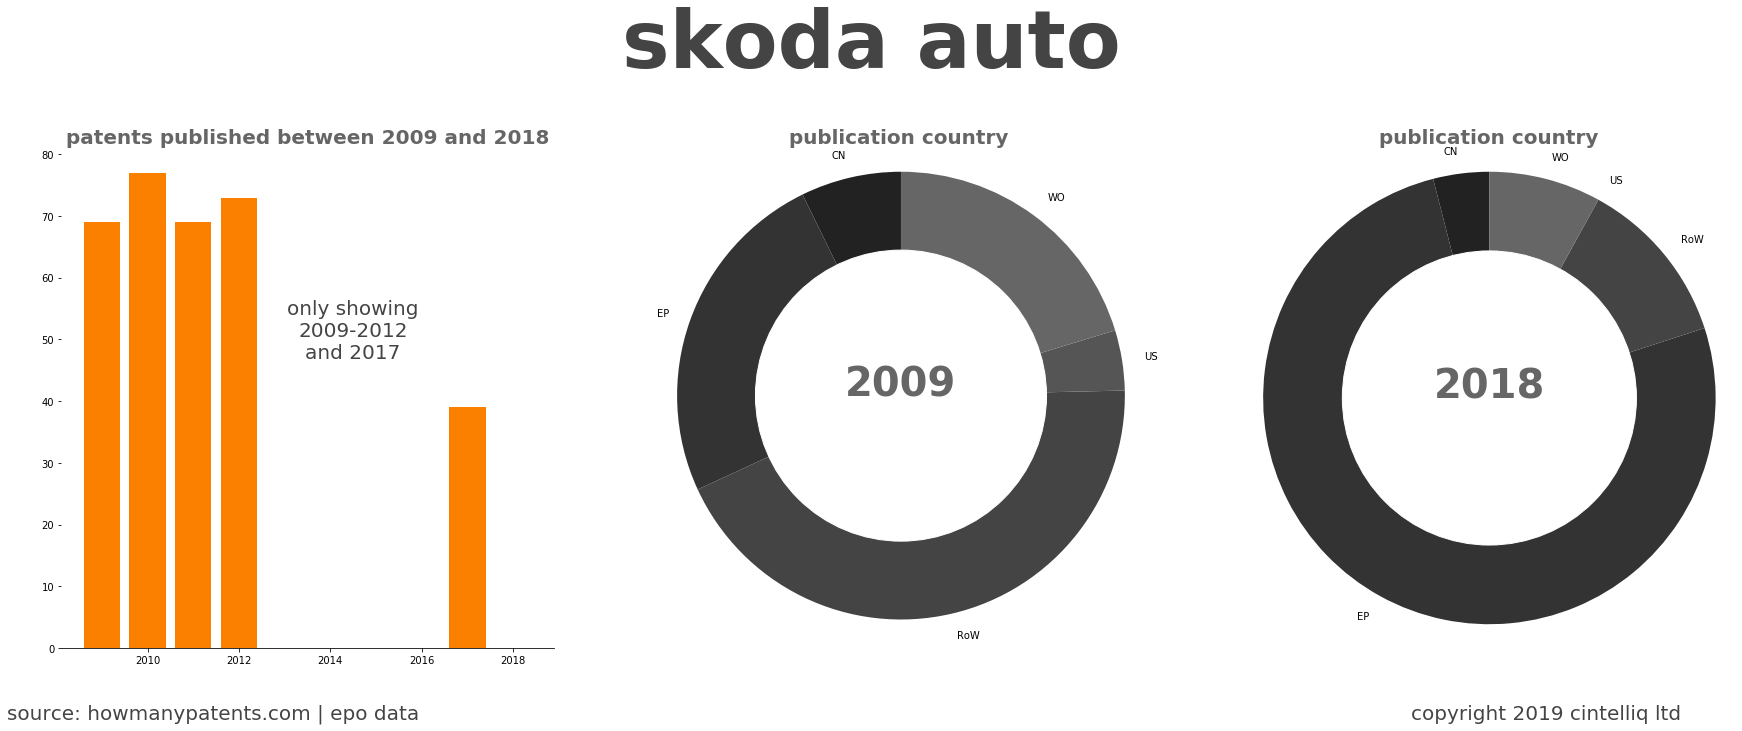 summary of patents for Skoda Auto